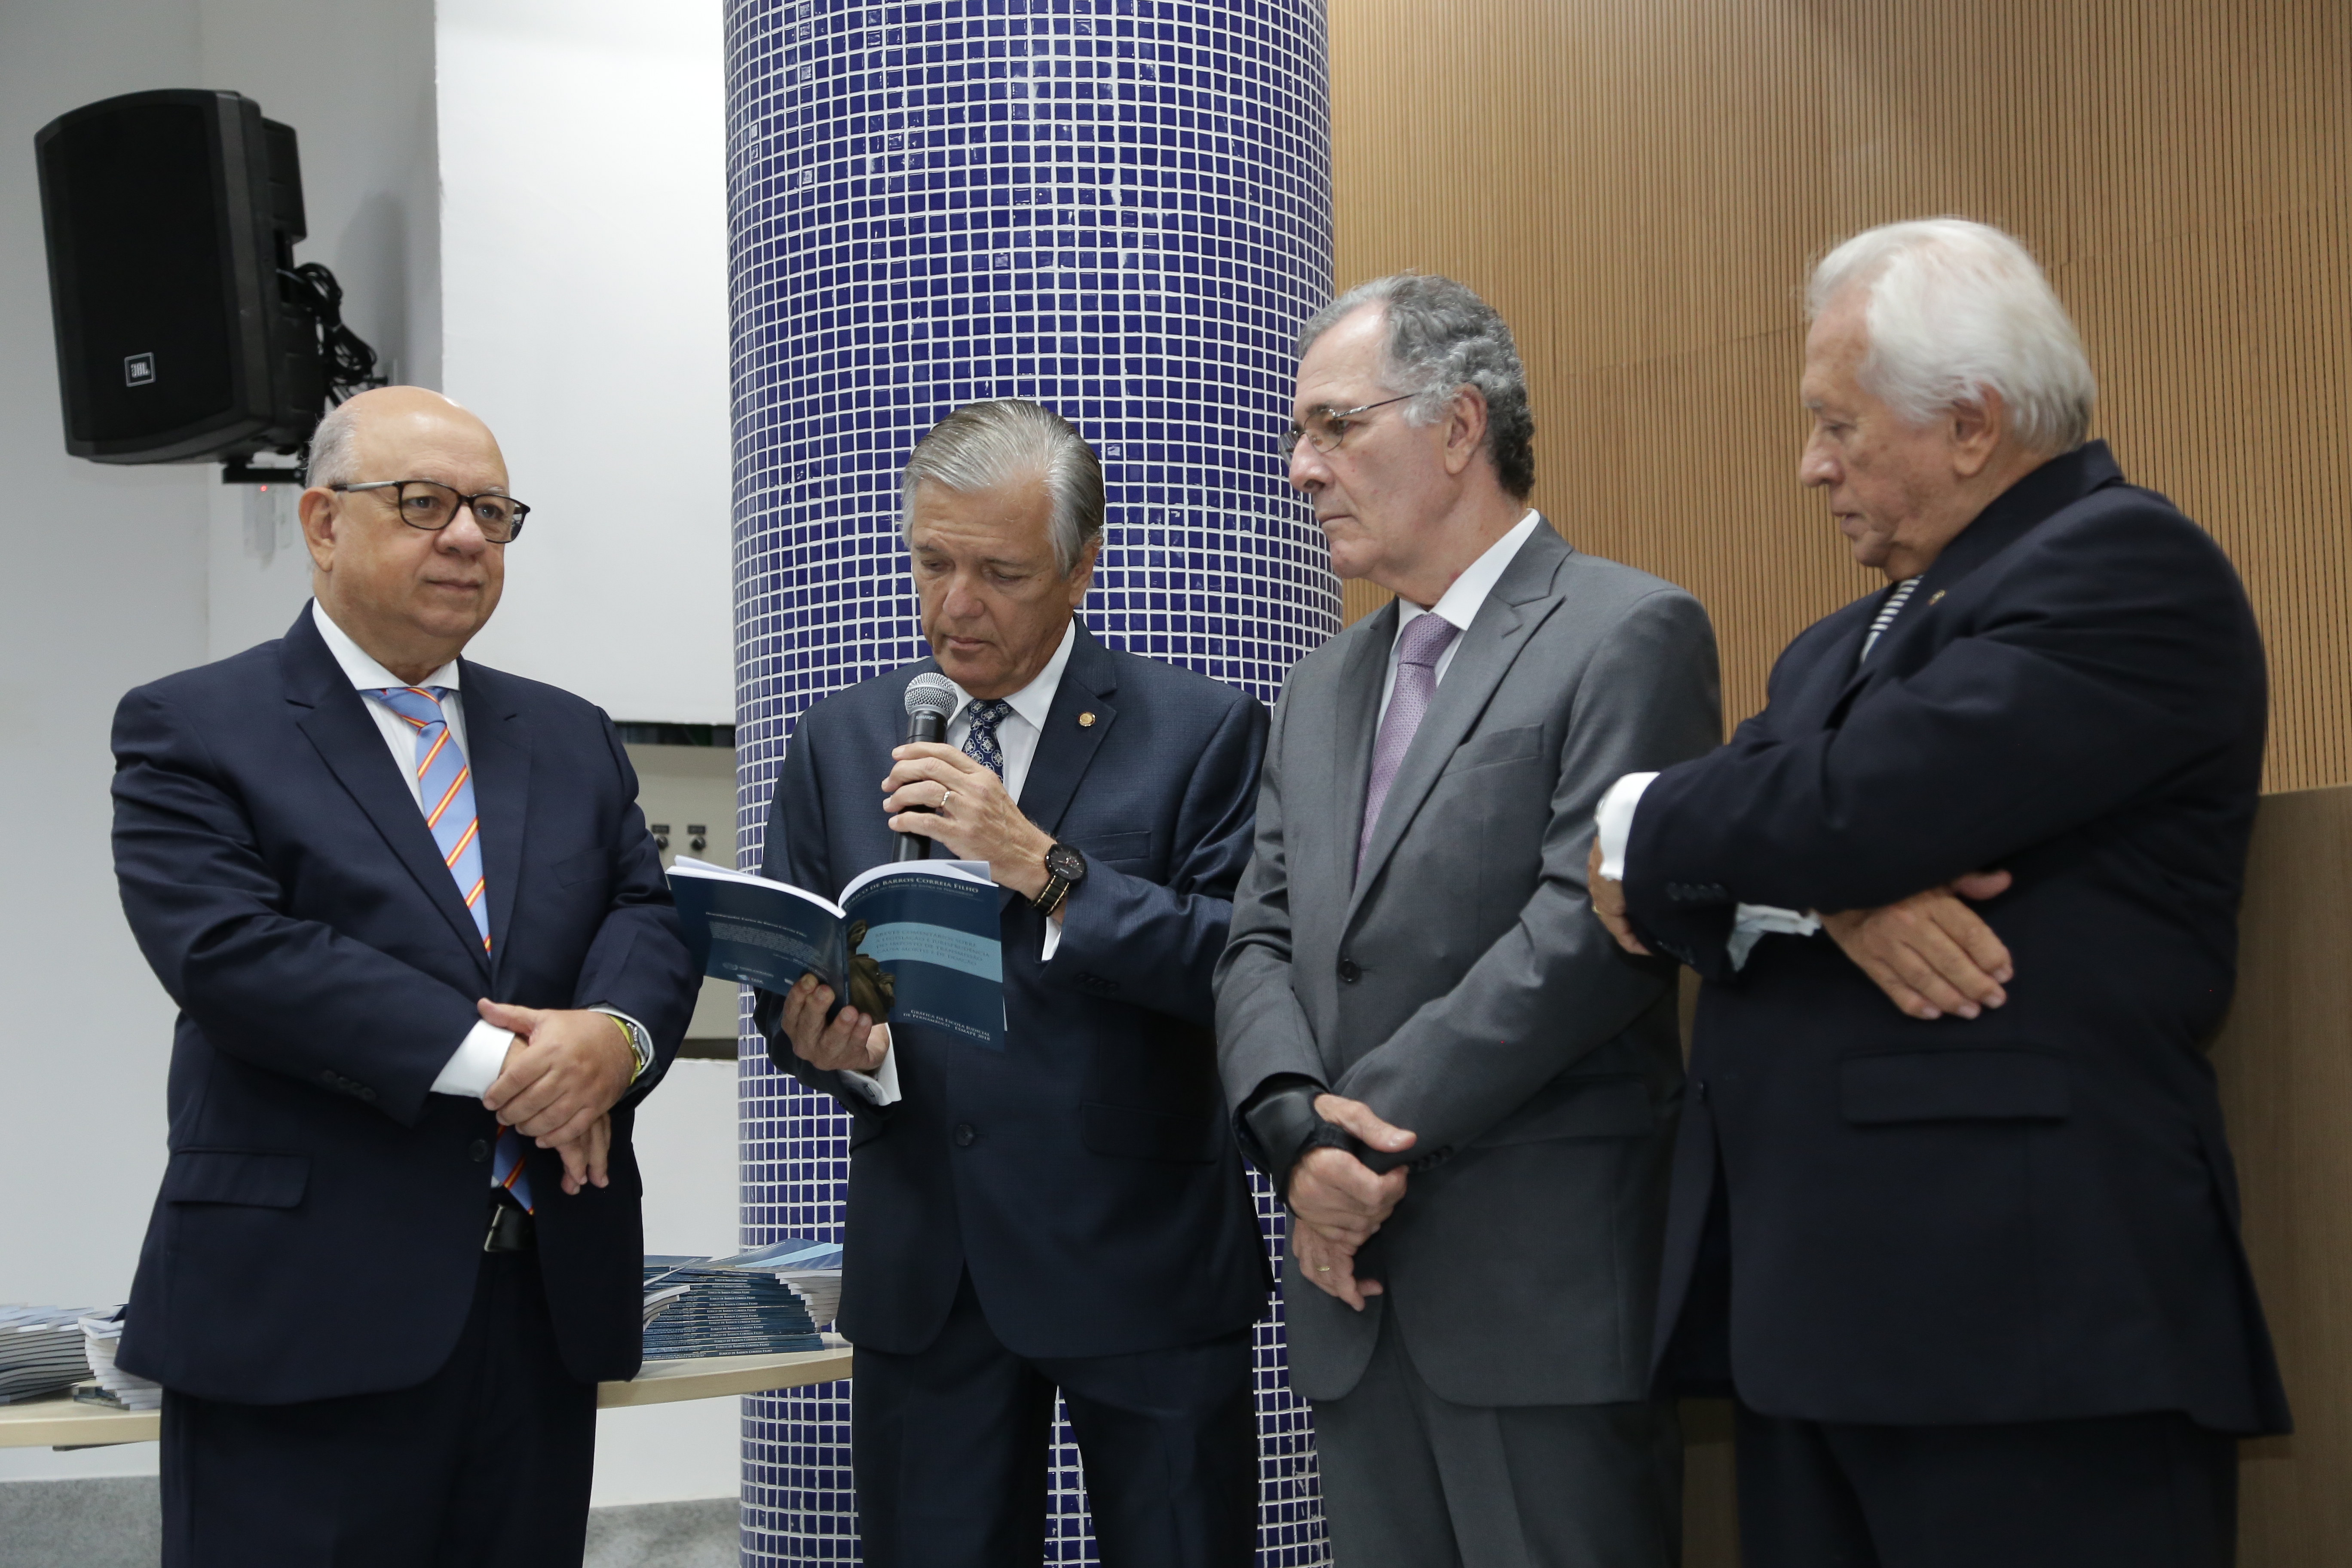 Desembargadores Eduardo Sertório, Eurico de Barros e Leopoldo Raposo e o advogado Silvio Neves Baptista